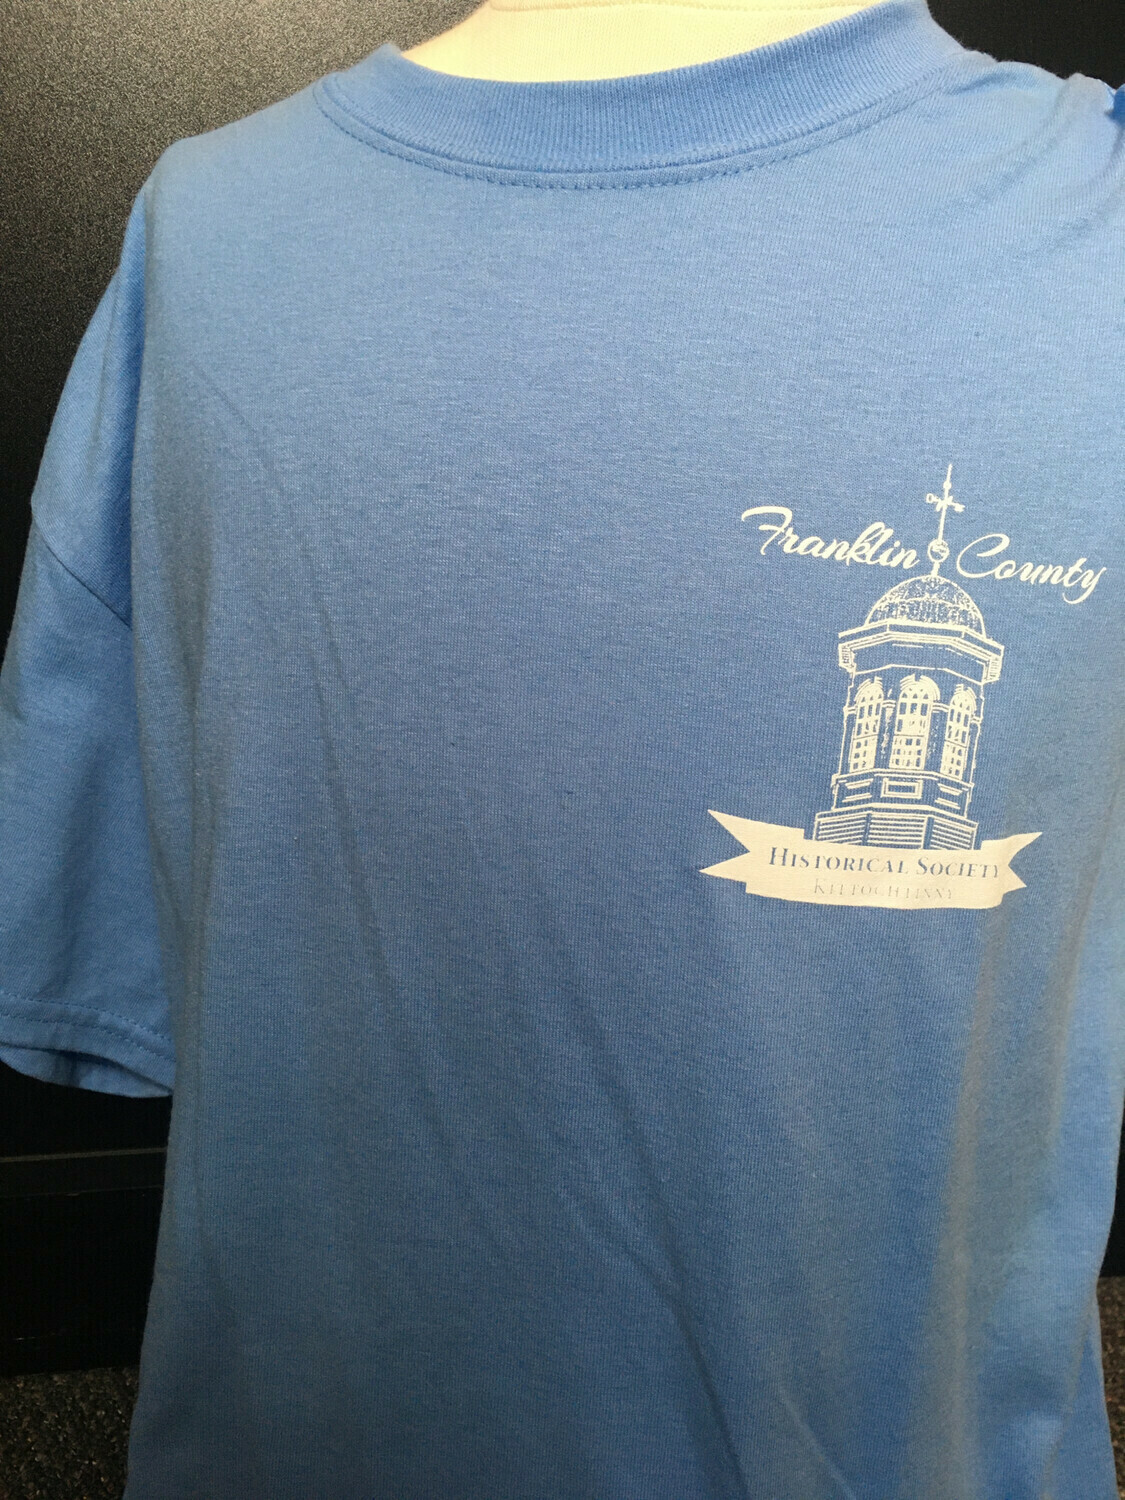 Tee Shirt "I DID TIME .." Blue (XL)